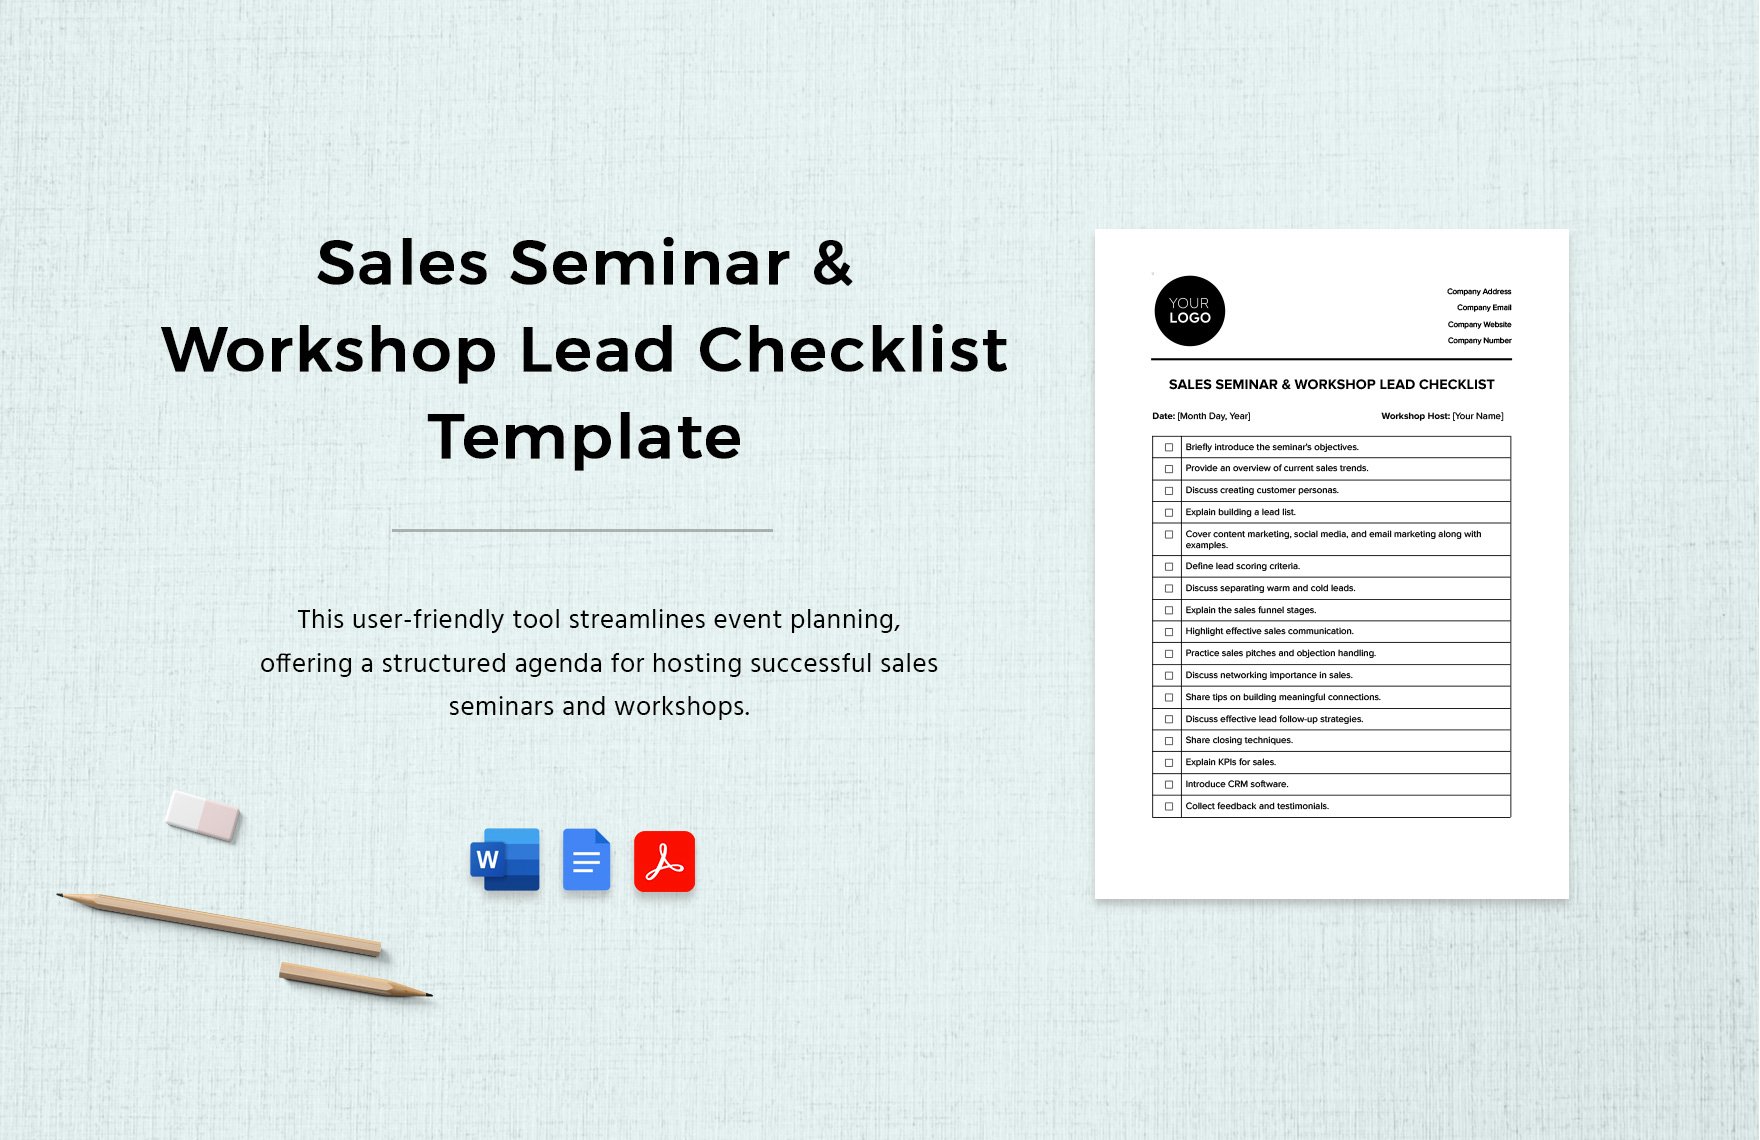 Sales Seminar & Workshop Lead Checklist Template